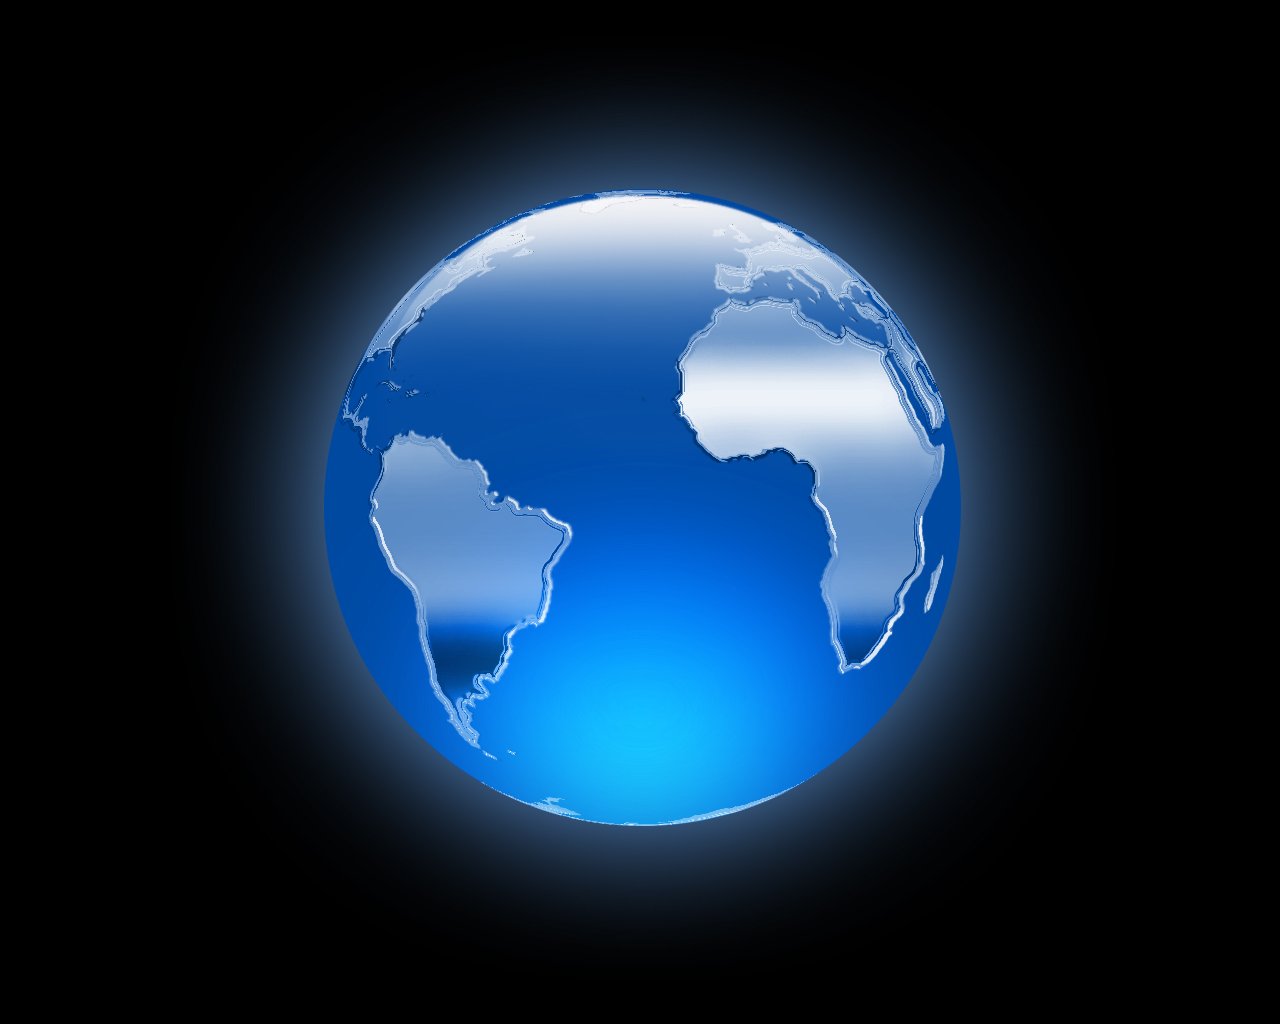 Blue metallic globe of the world on a black background - Earth